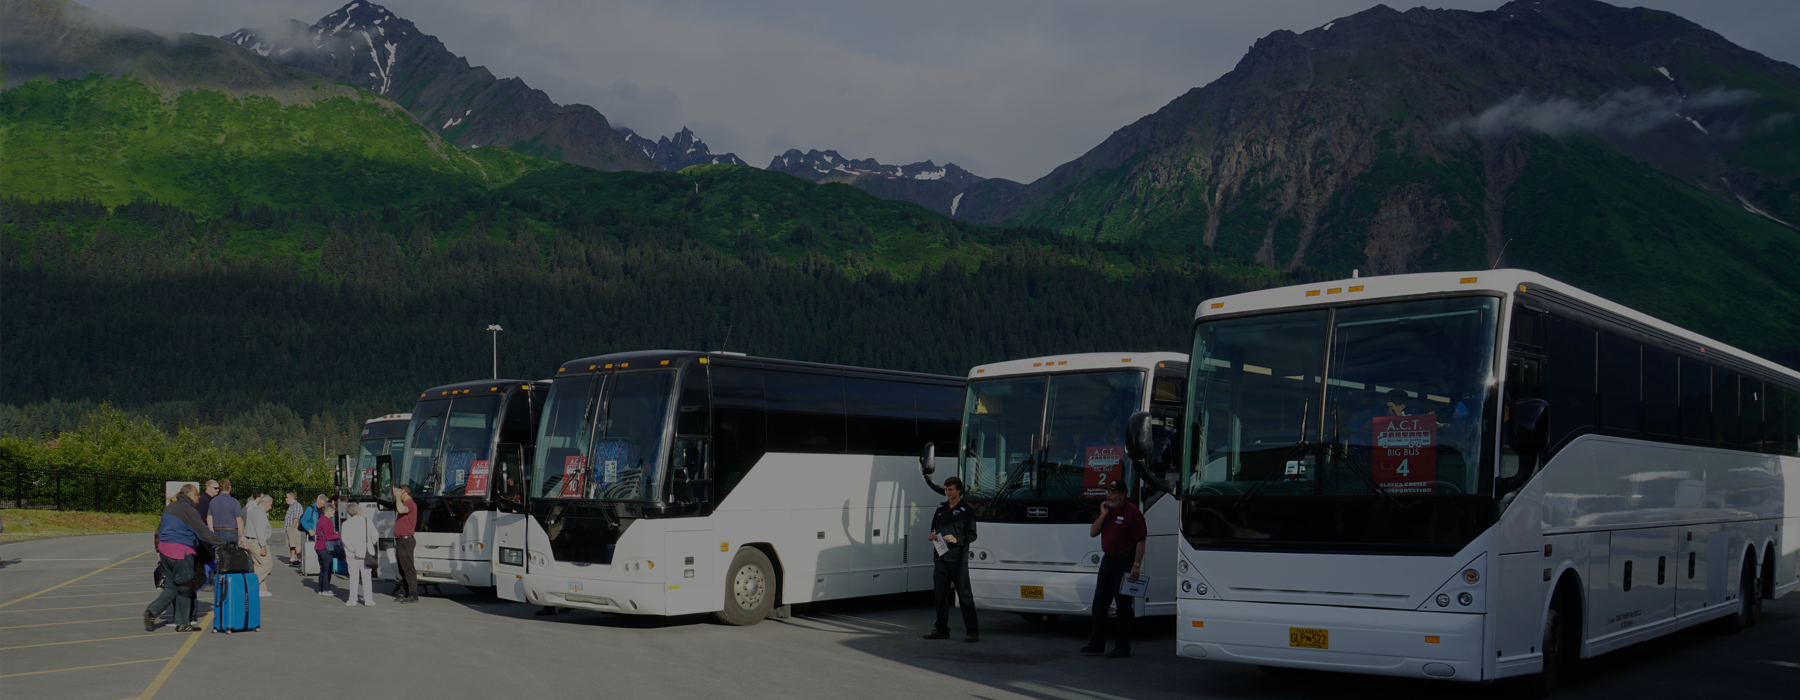 Seward to Anchorage bus